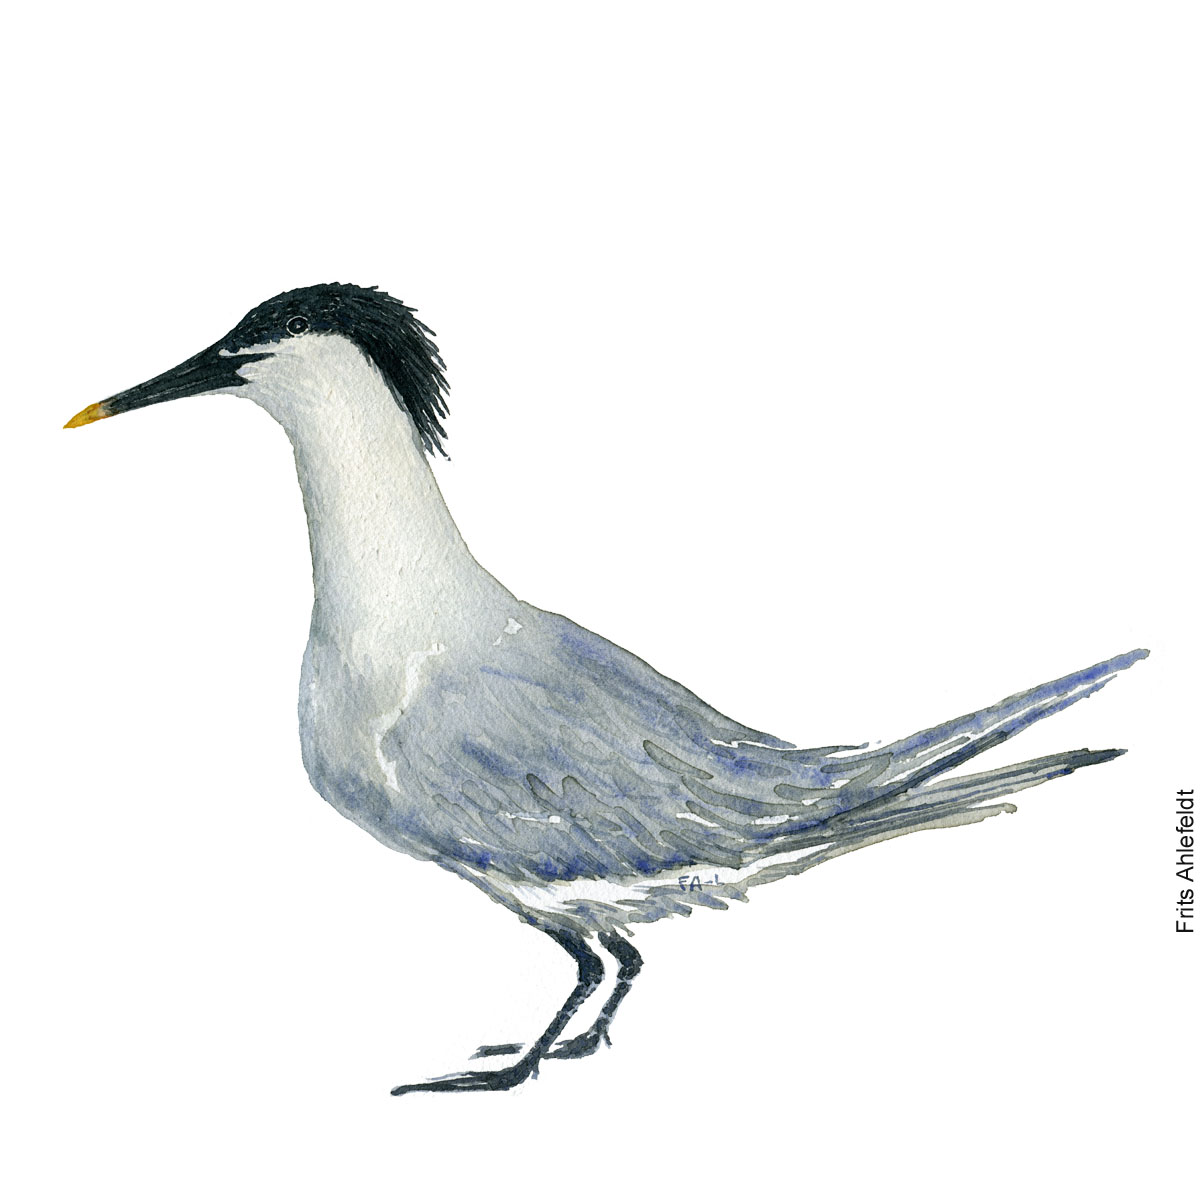 Sandwisch tern. Bird watercolor illustration handmade by Frits Ahlefeldt